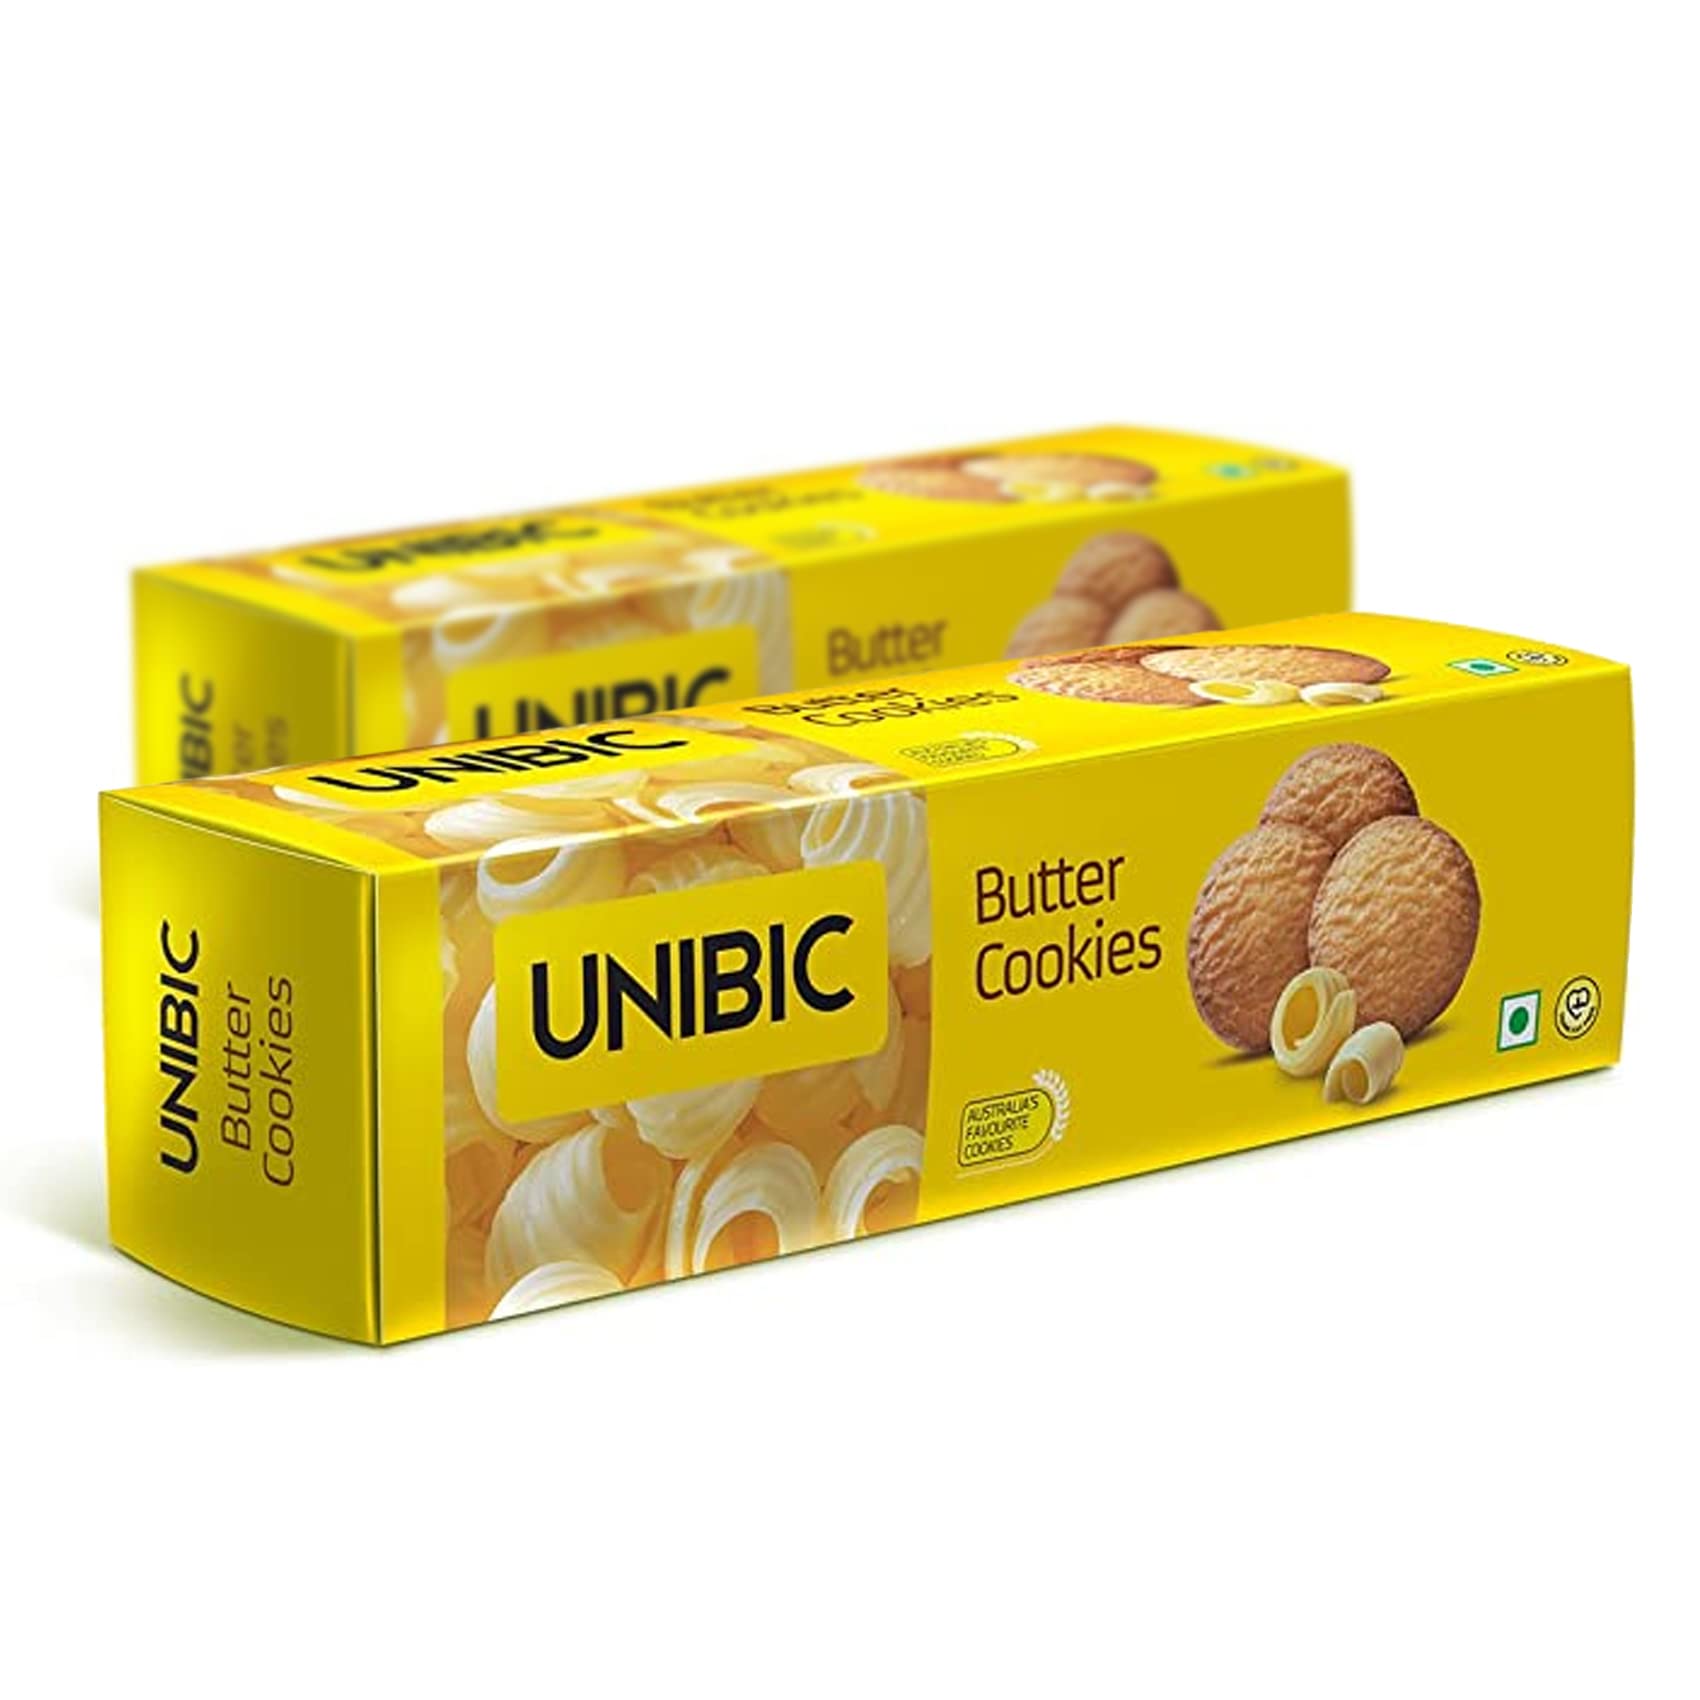 Unibic shortbread butter cookies 150g